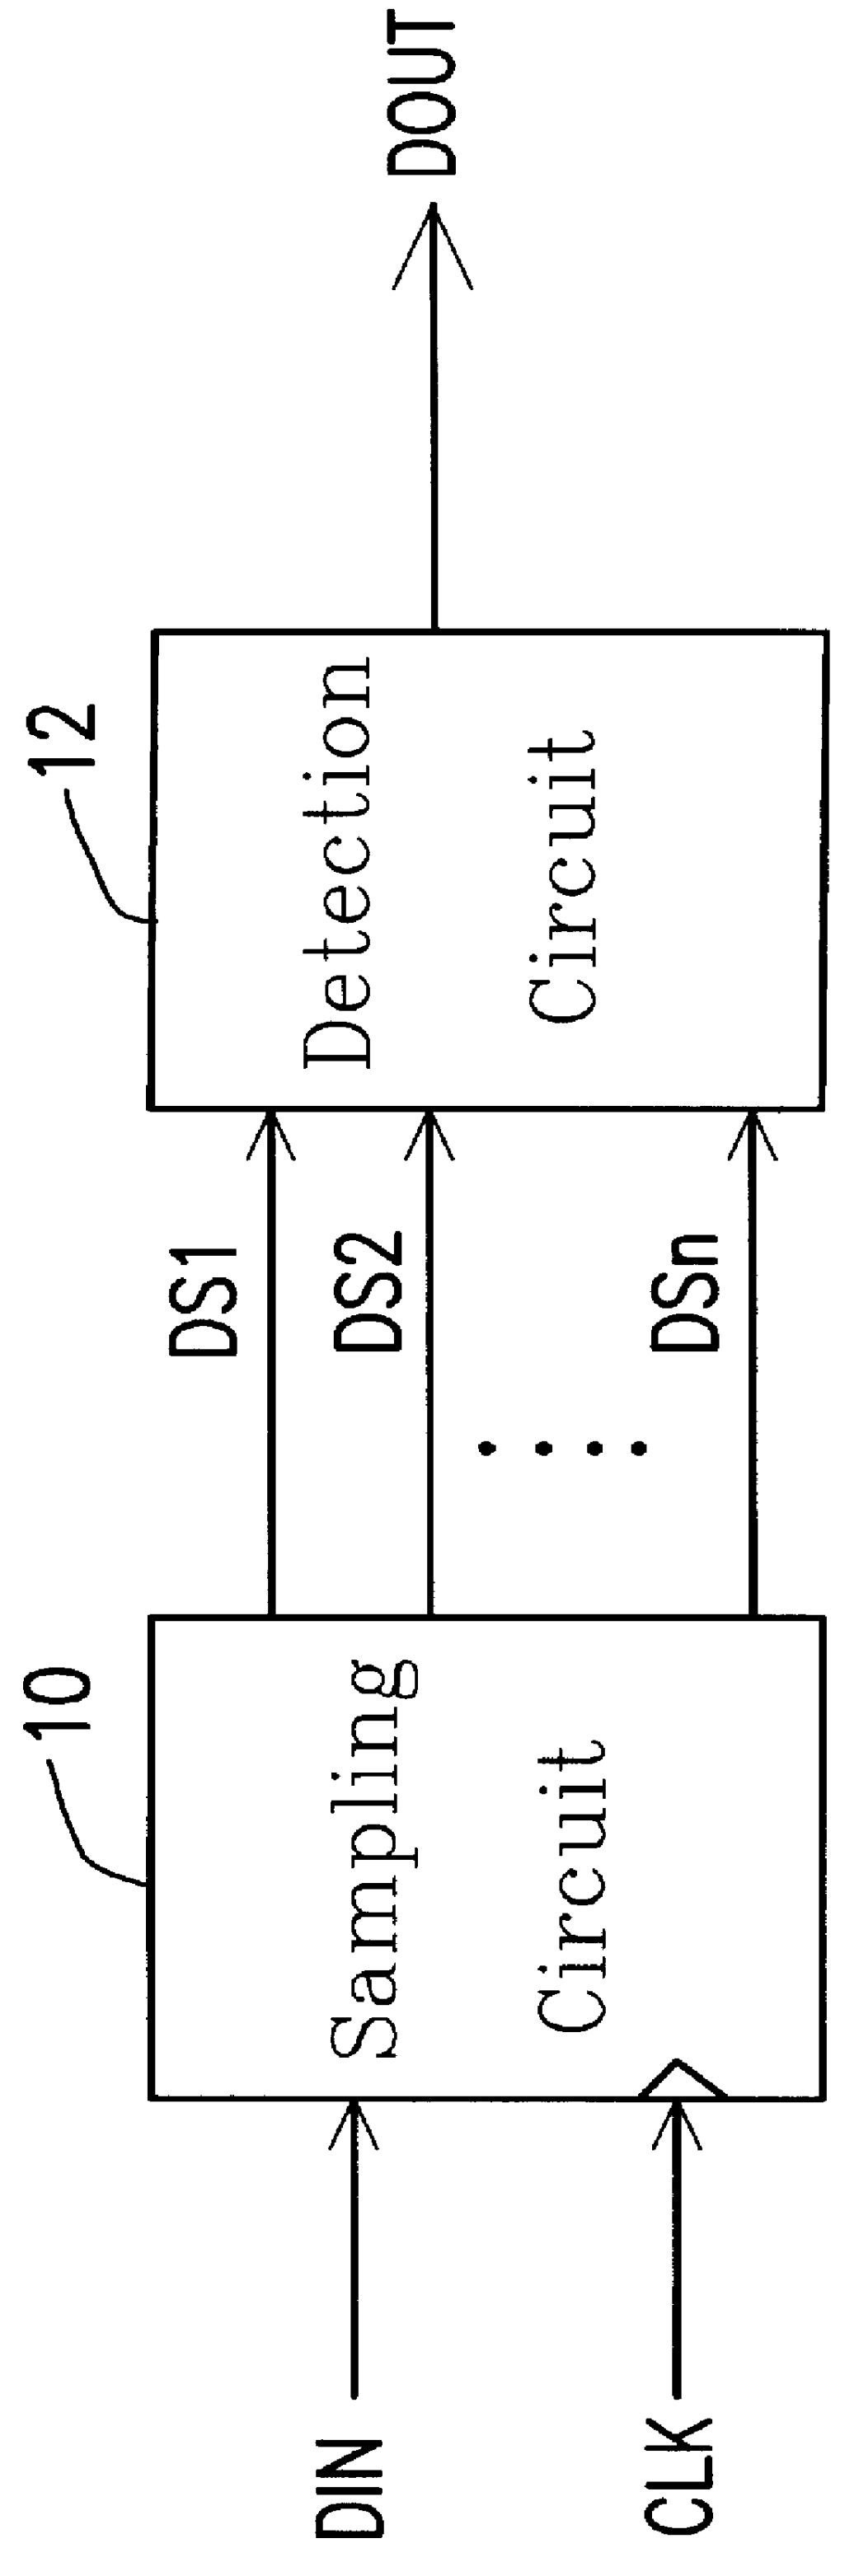 Digital pulse filtering circuit